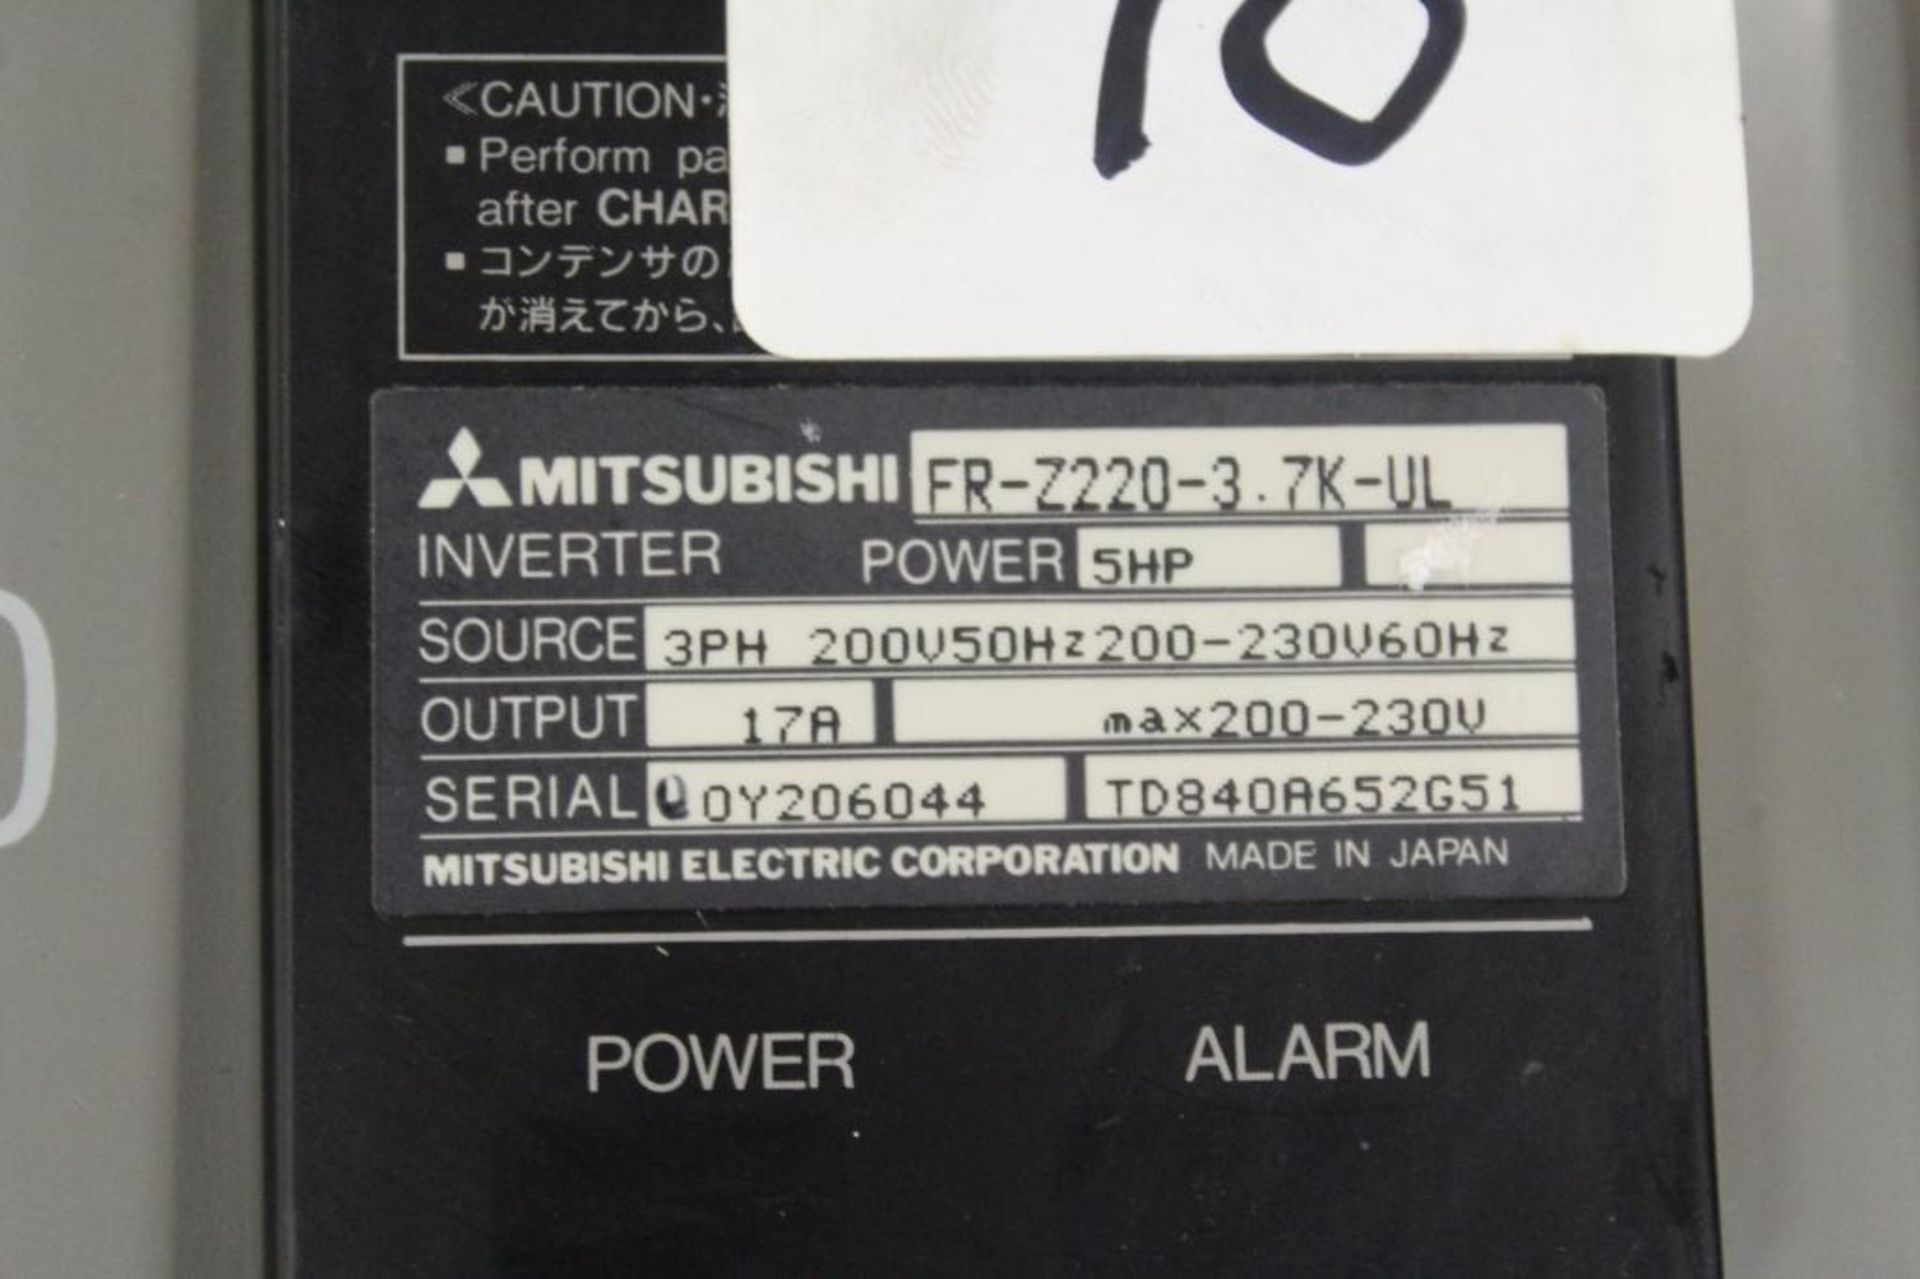 Mitsubishi FR-Z220-3.7K-UL Inverter - Image 2 of 2